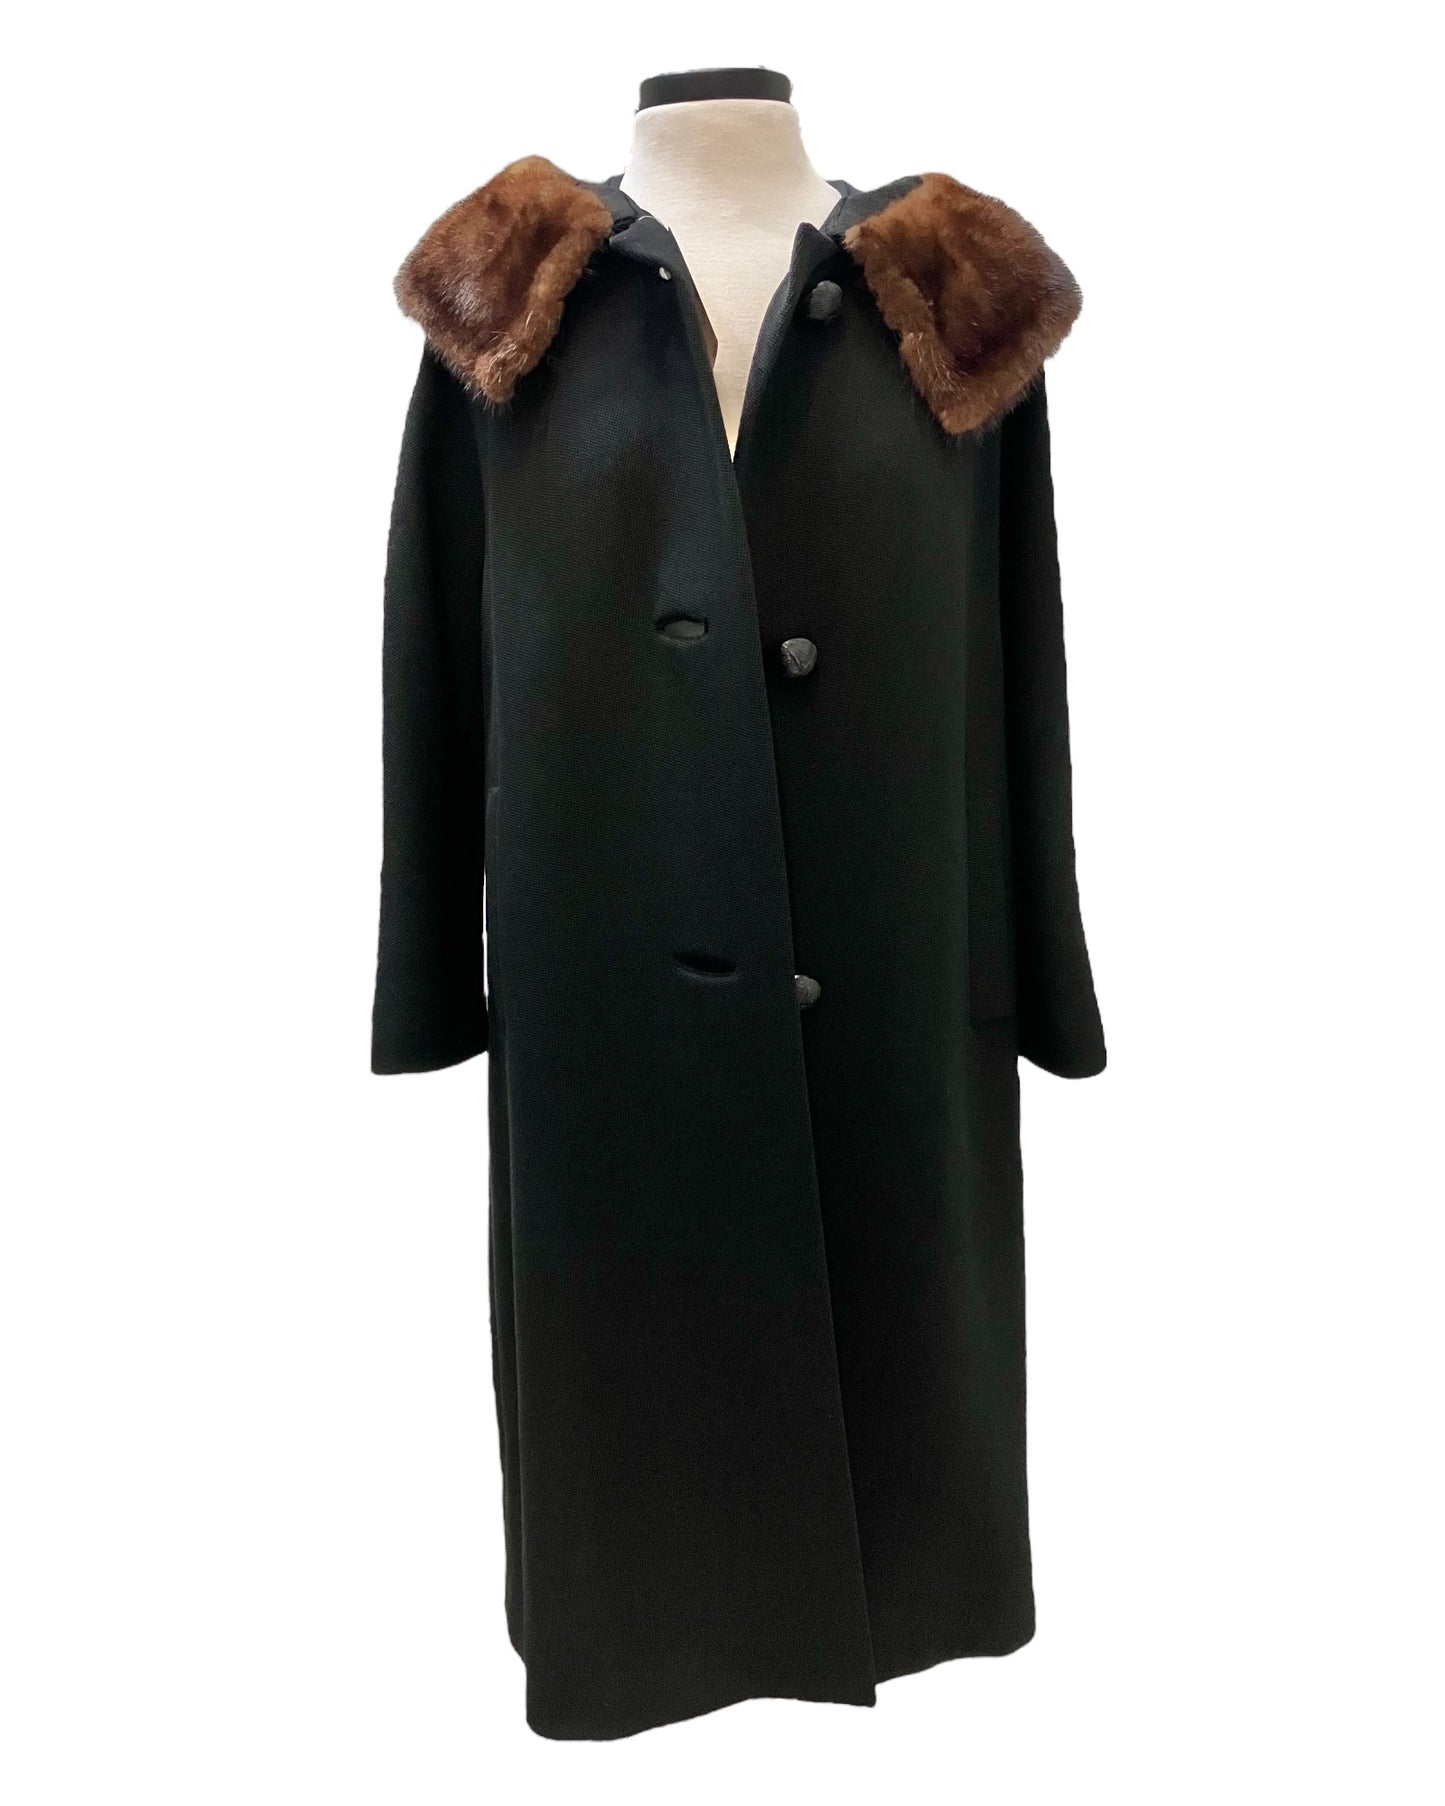 Vintage Rothmoor Coat With Fur Collar